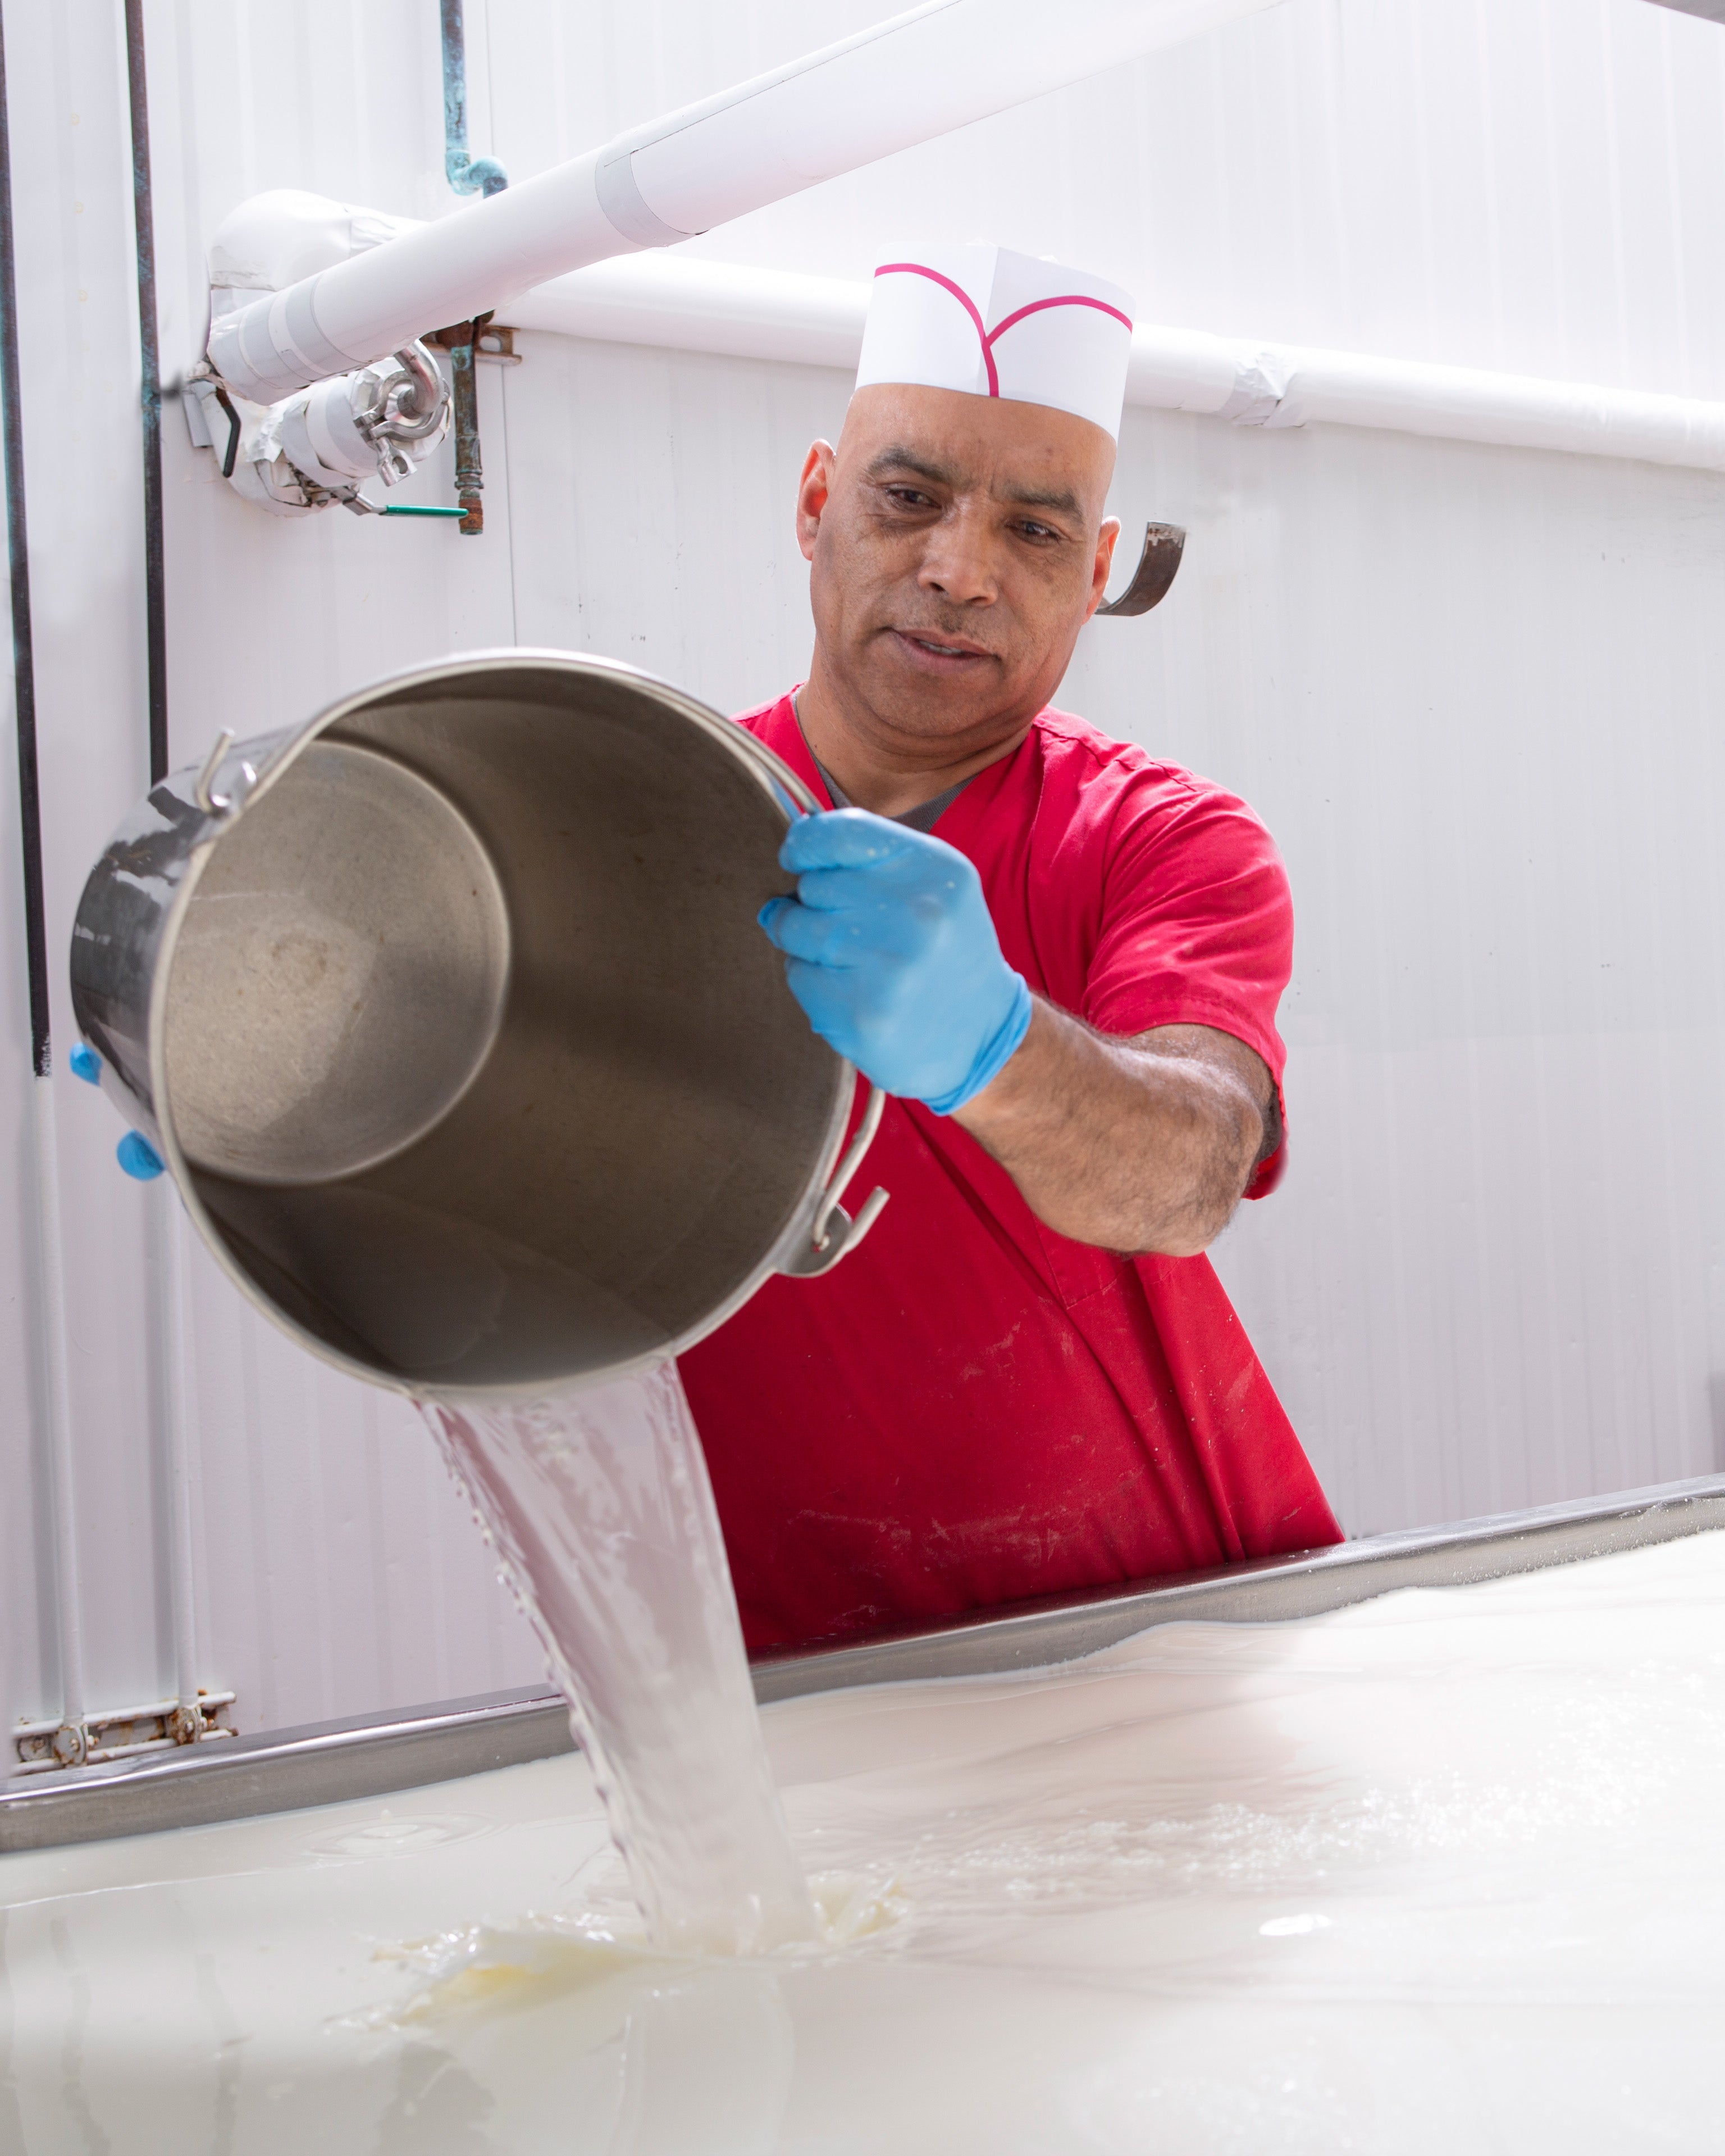 Cheesemaker dumping ingredients into a vat of milk